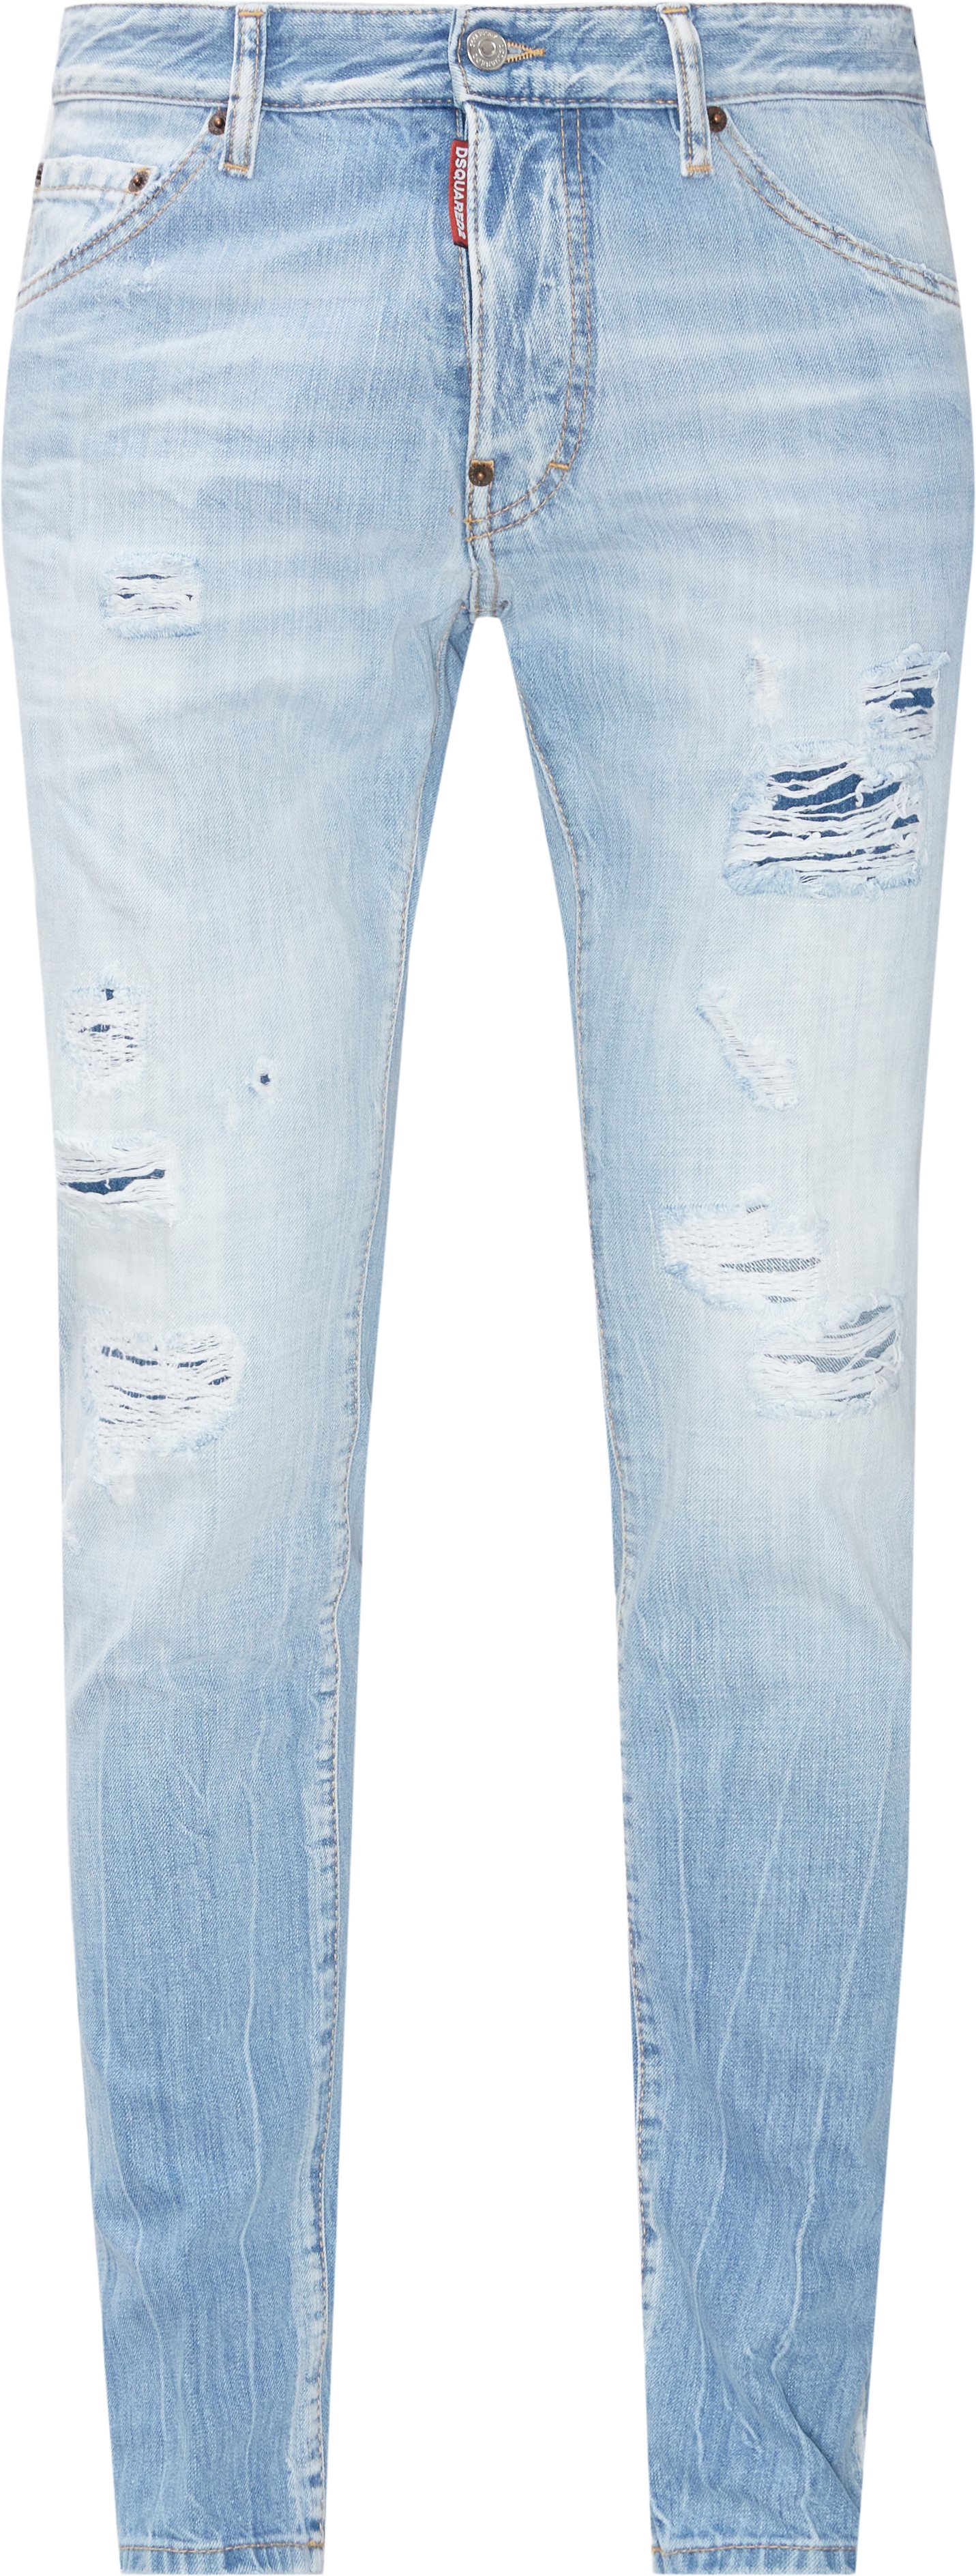 Light L.A. Wash Cool Guy Jeans - Jeans - Slim fit - Denim